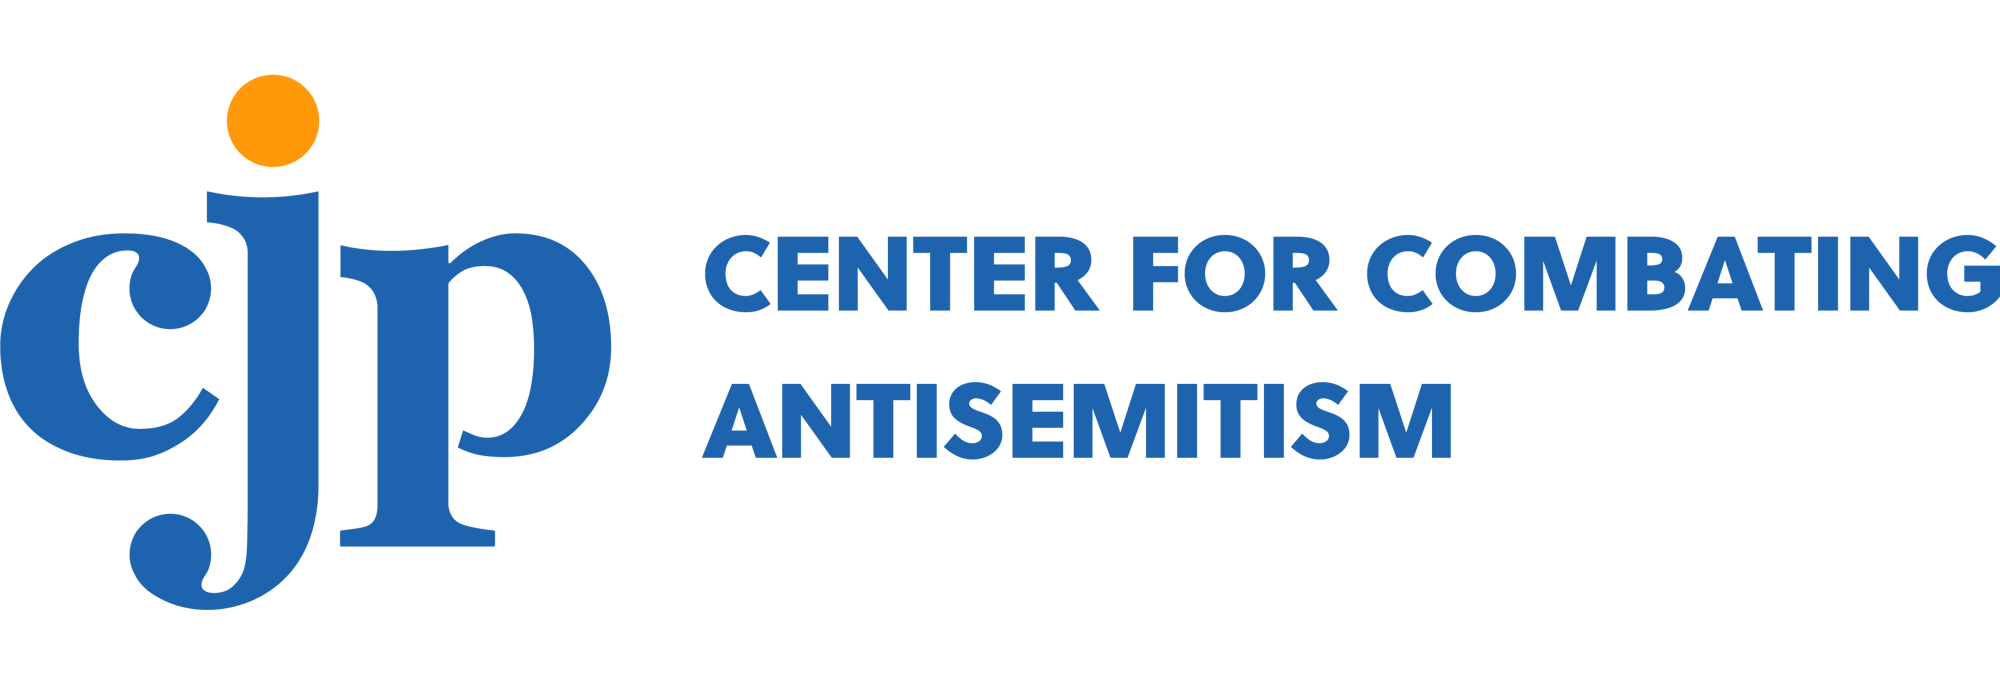 Center_for_Combating_Antisemitism_lockup-04-1